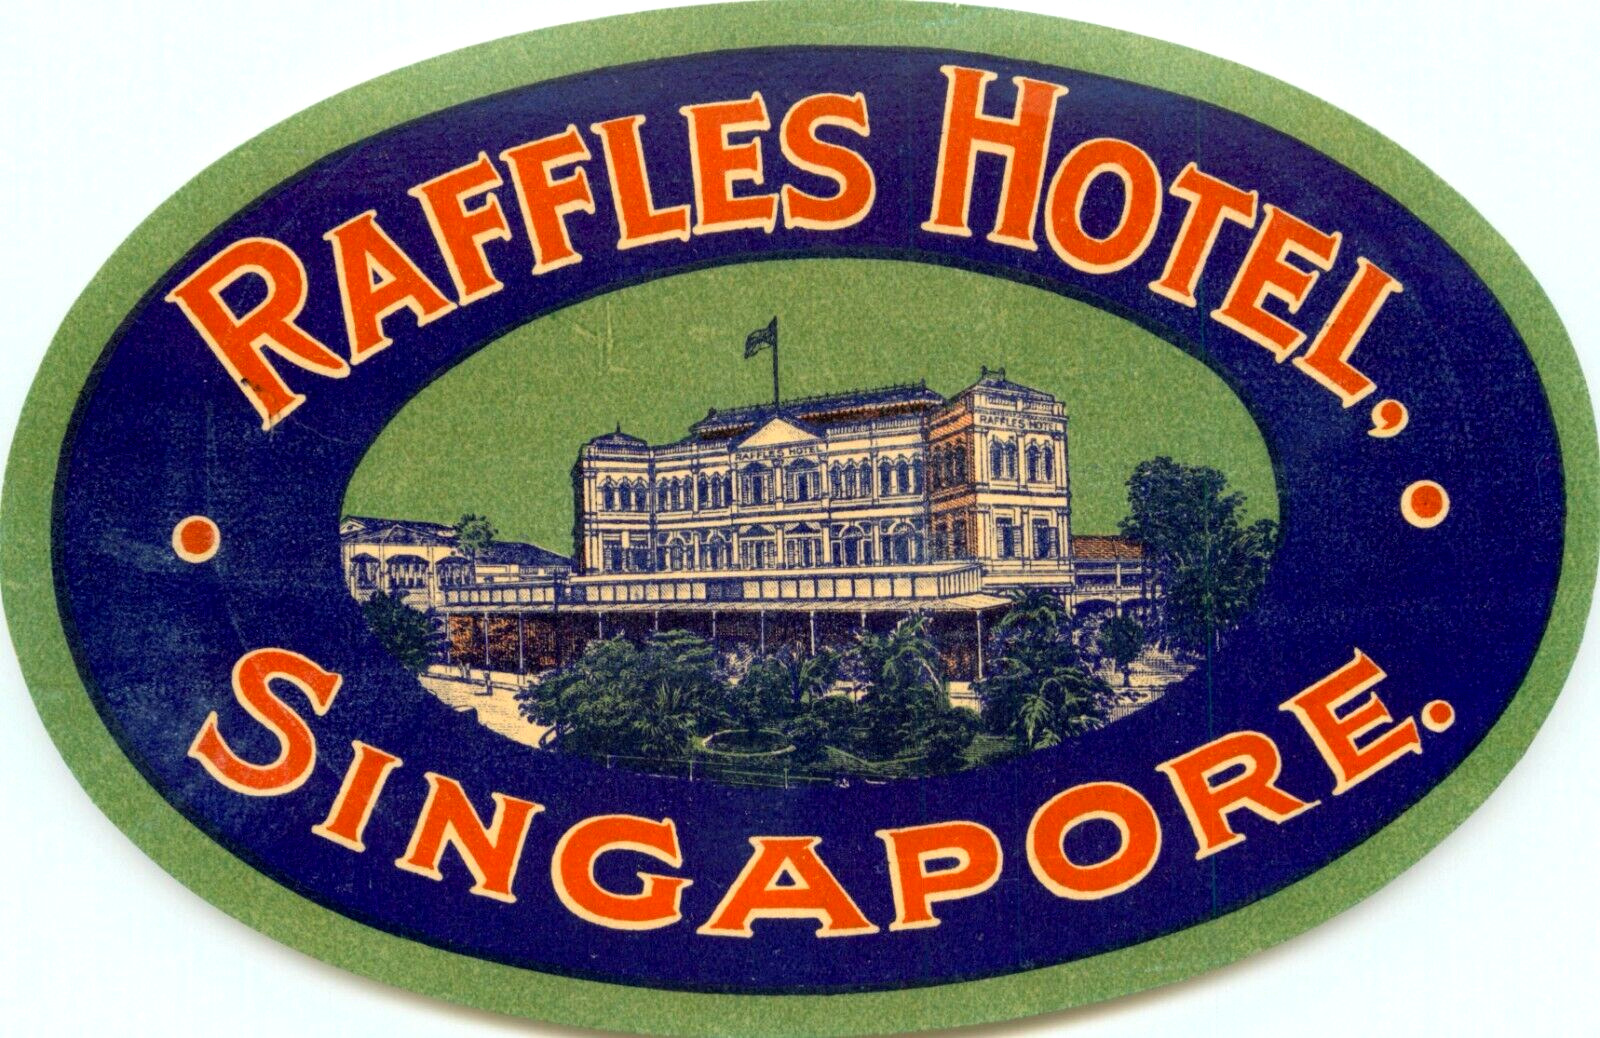 Raffles Hotel ~SINGAPORE~ Beautiful / Colorful Early Luggage Label, c. 1930